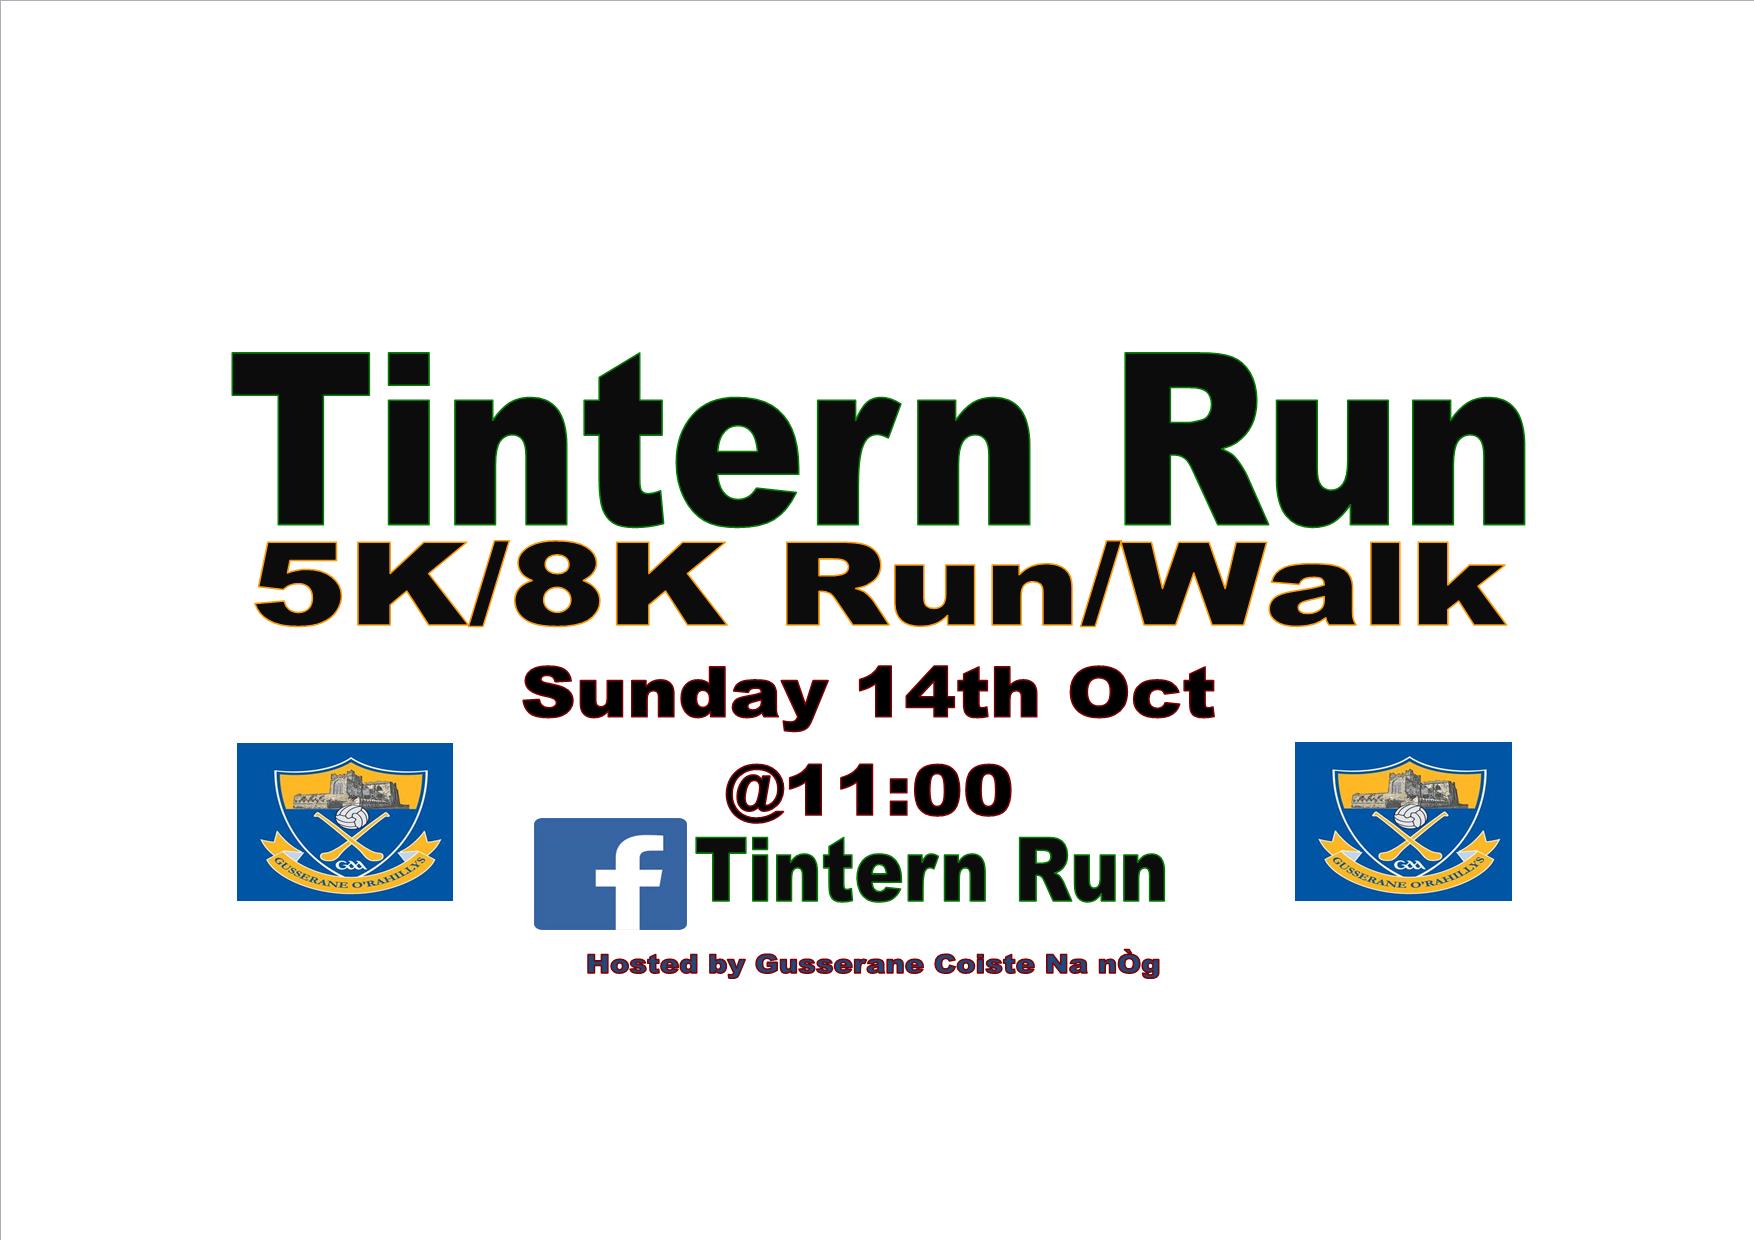 Tintern Run 5k/8k Run/Walk Sunday 14th Oct